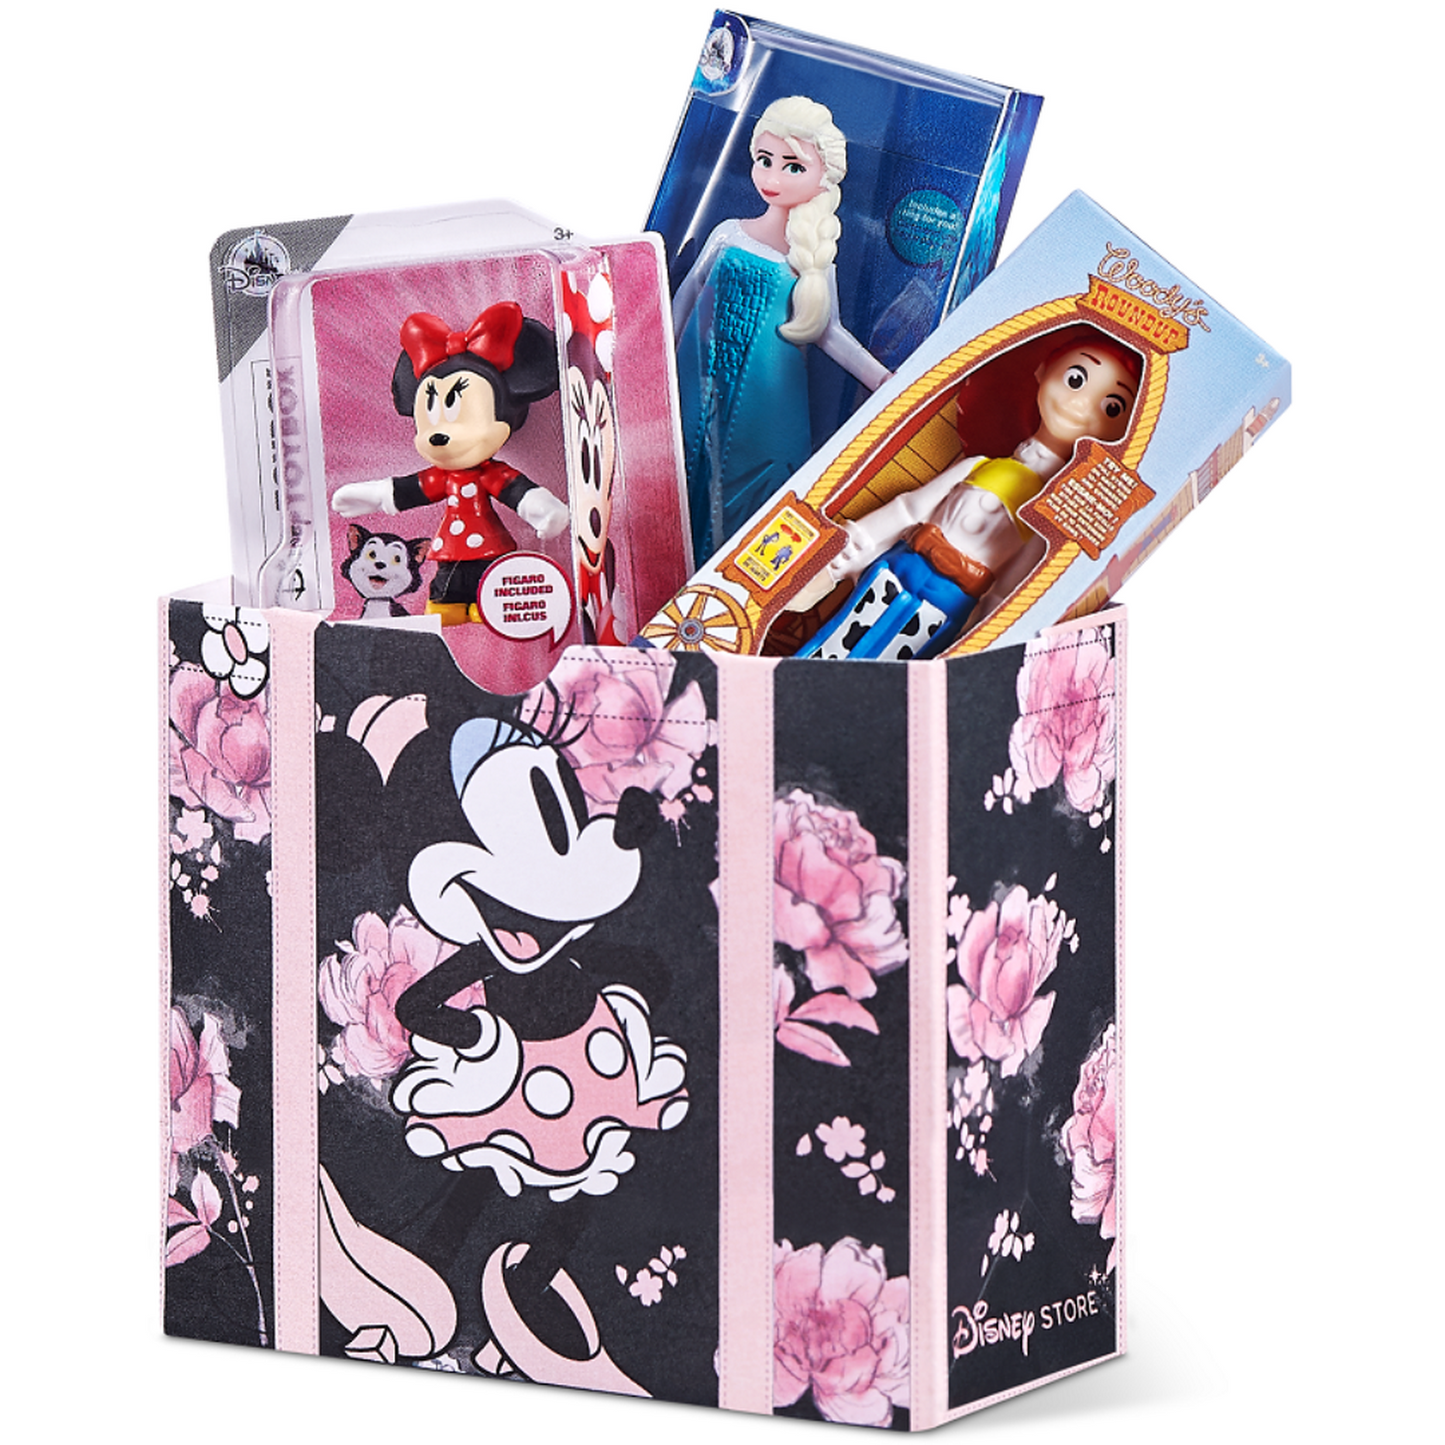 Toy Mini Brands Disney Store Edition